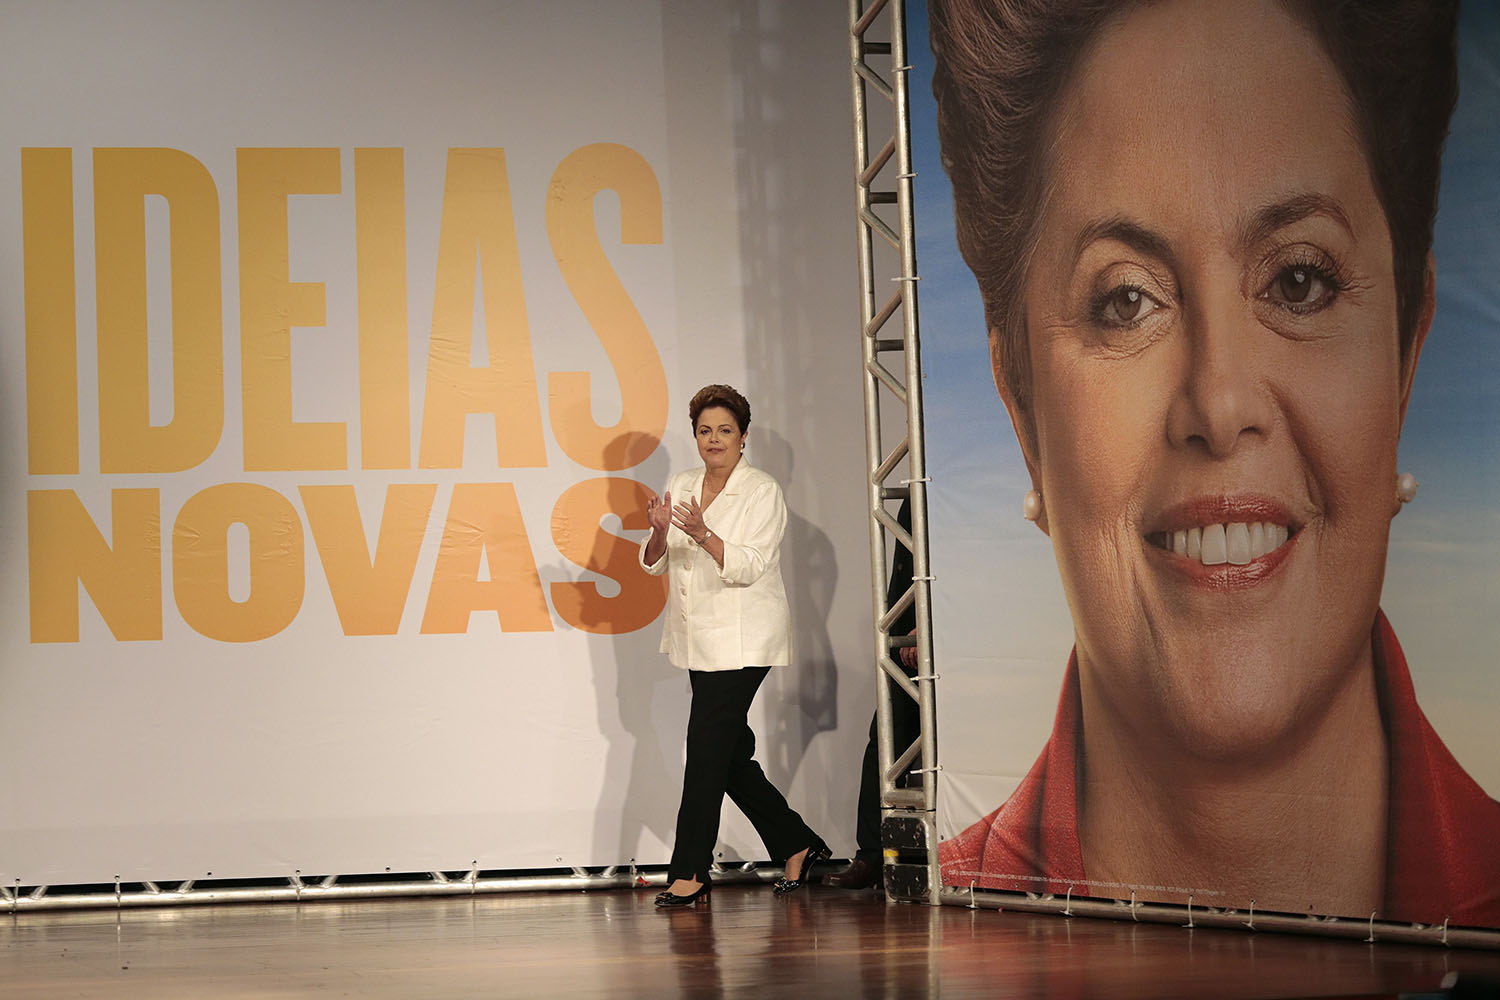 Tras ganar la primera vuelta, Rousseff afirma que "la lucha continúa"